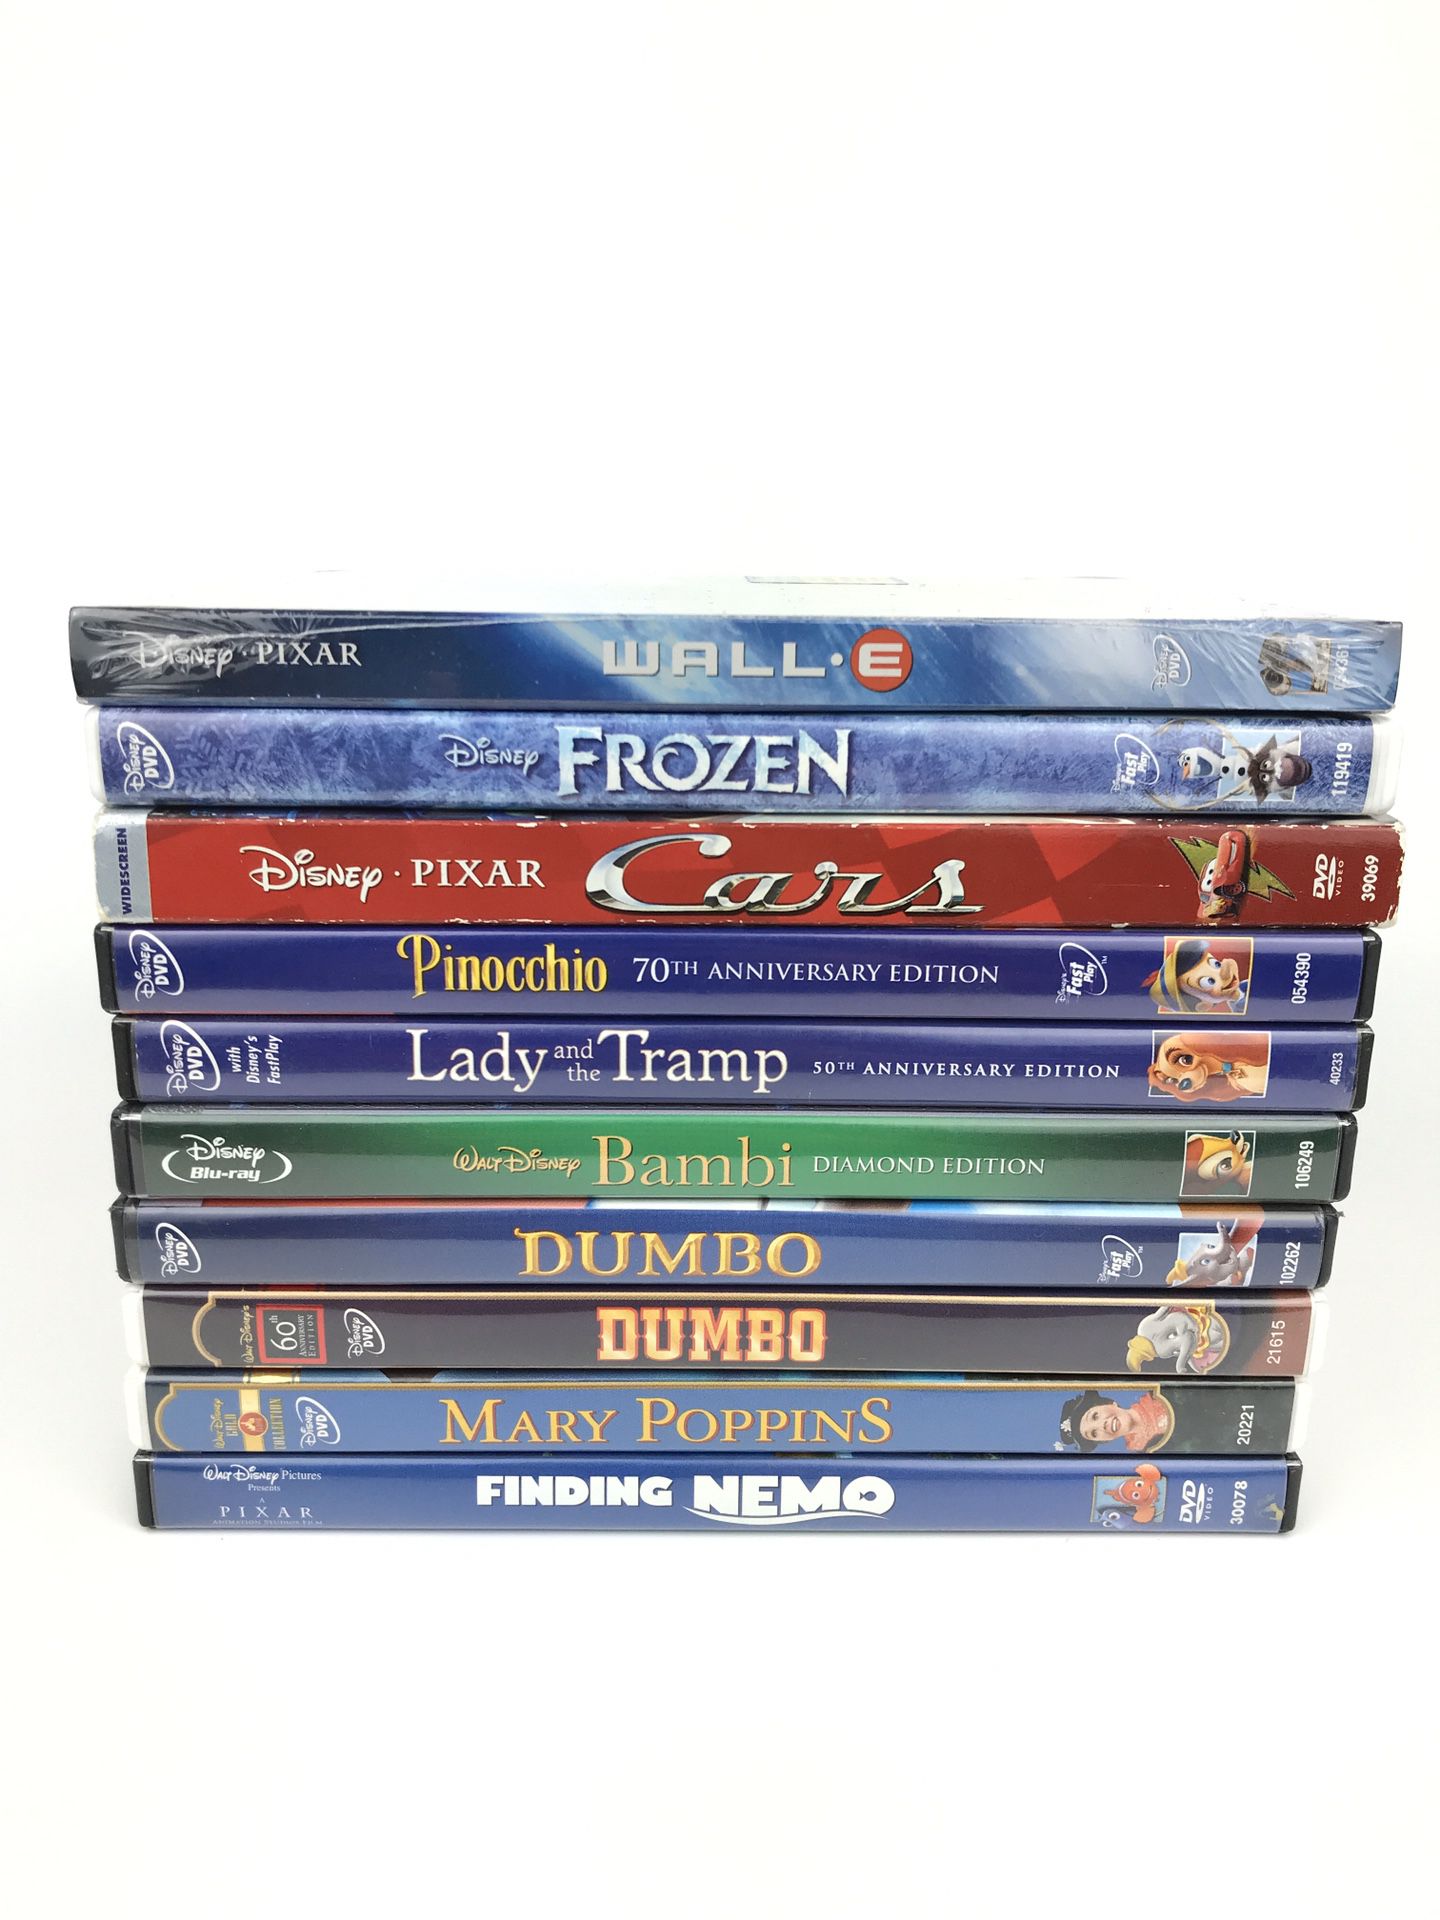 10 classic Disney DVDs